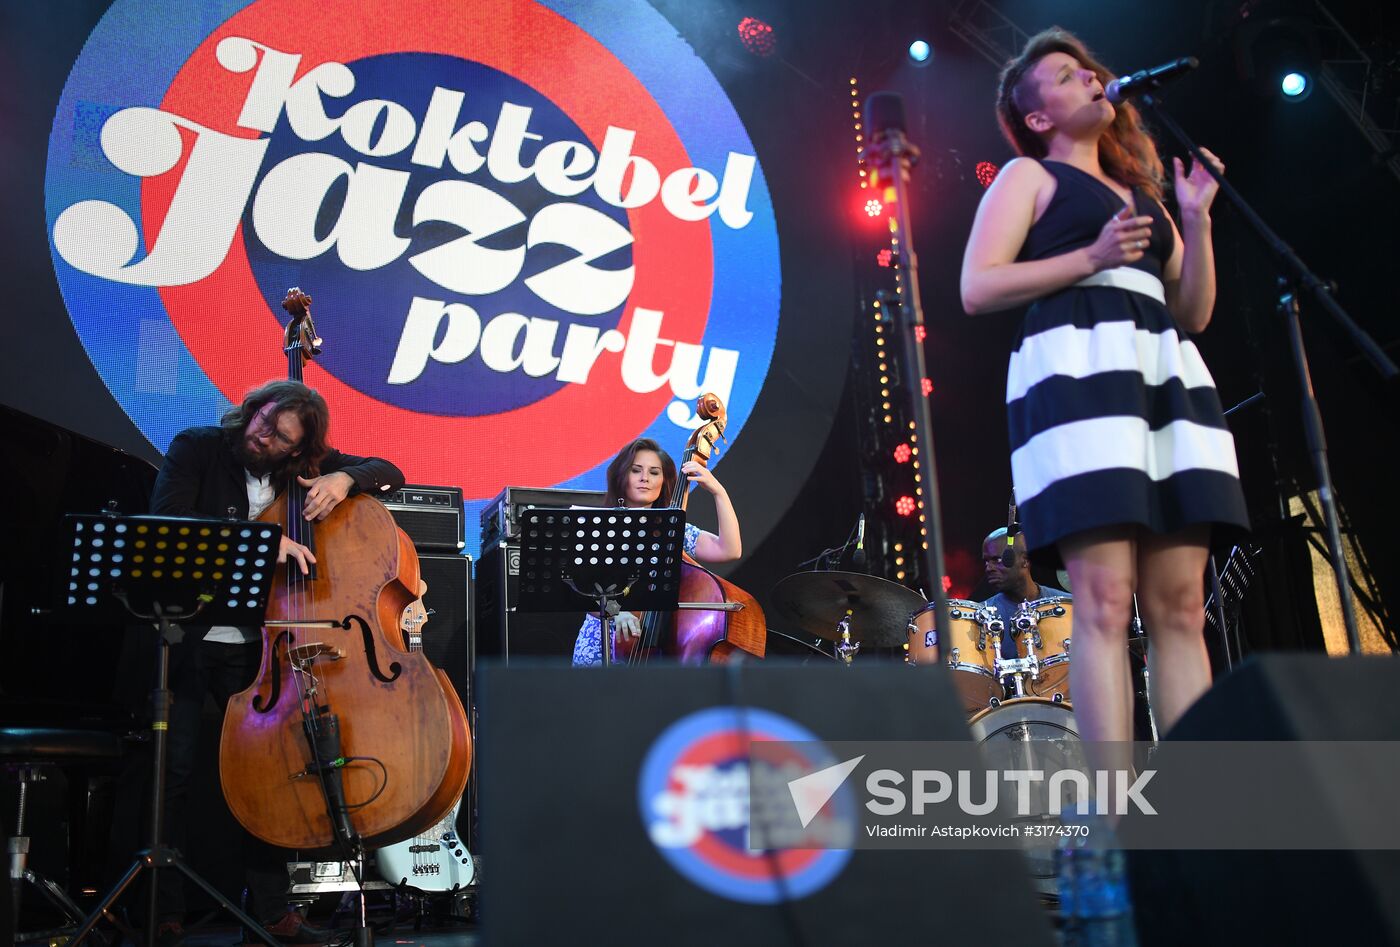 Koktebel Jazz Party 2017